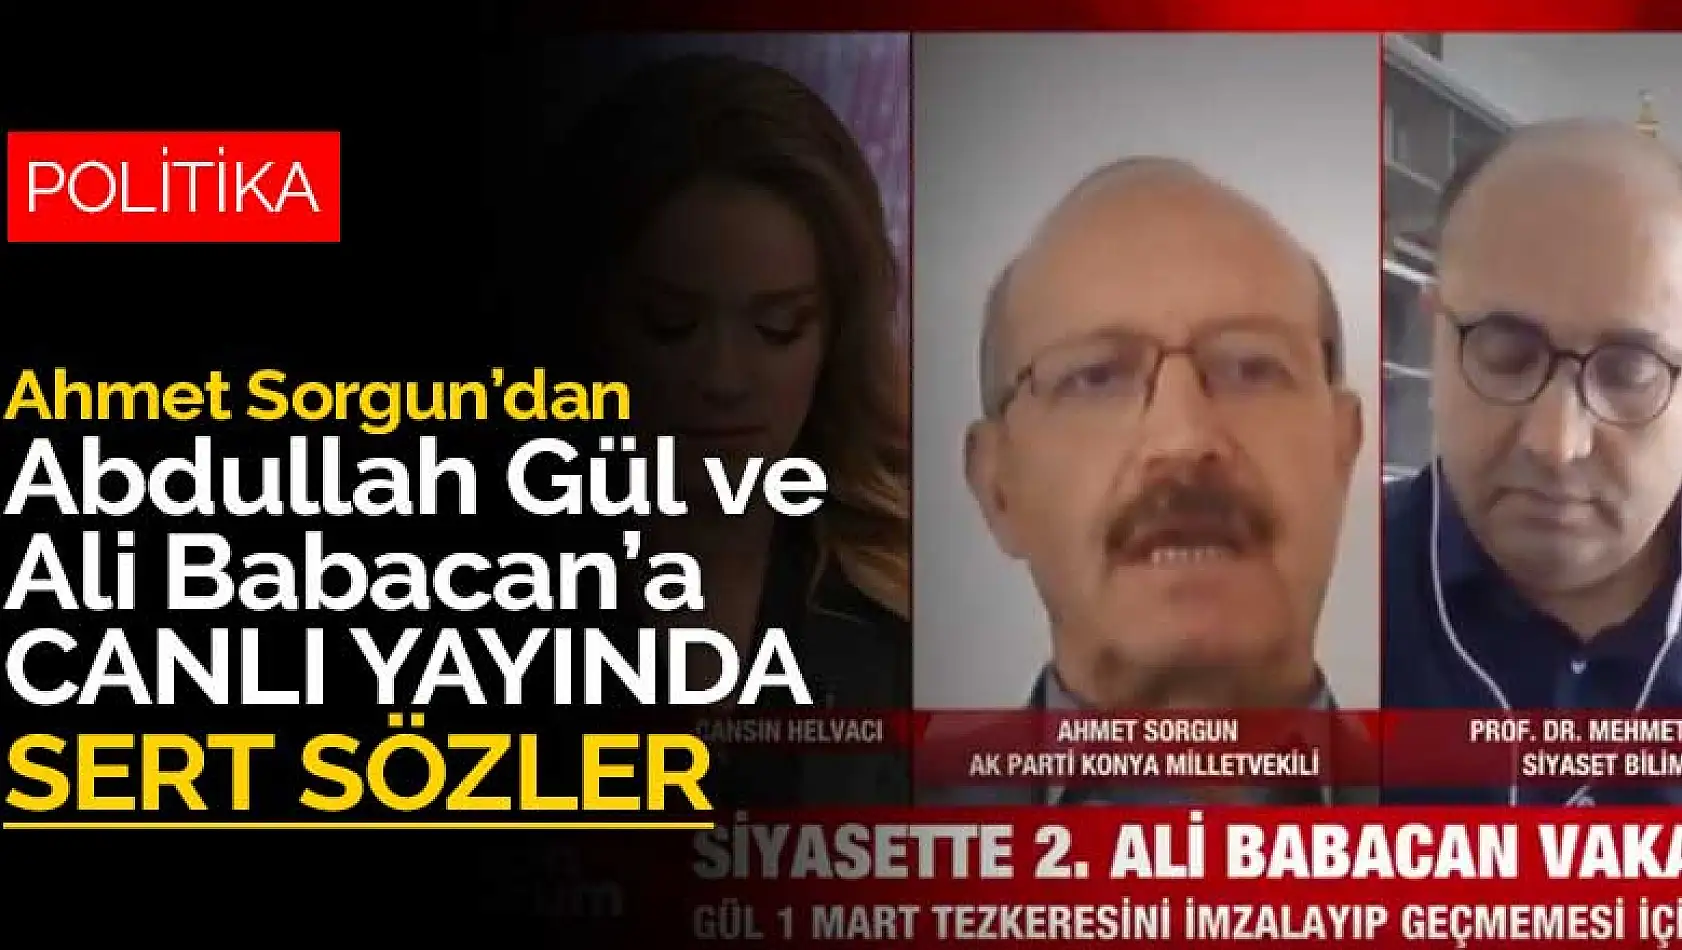 Konya Milletvekili Ahmet Sorgun'dan Abdullah Gül ve Ali Babacan'a sert sözler